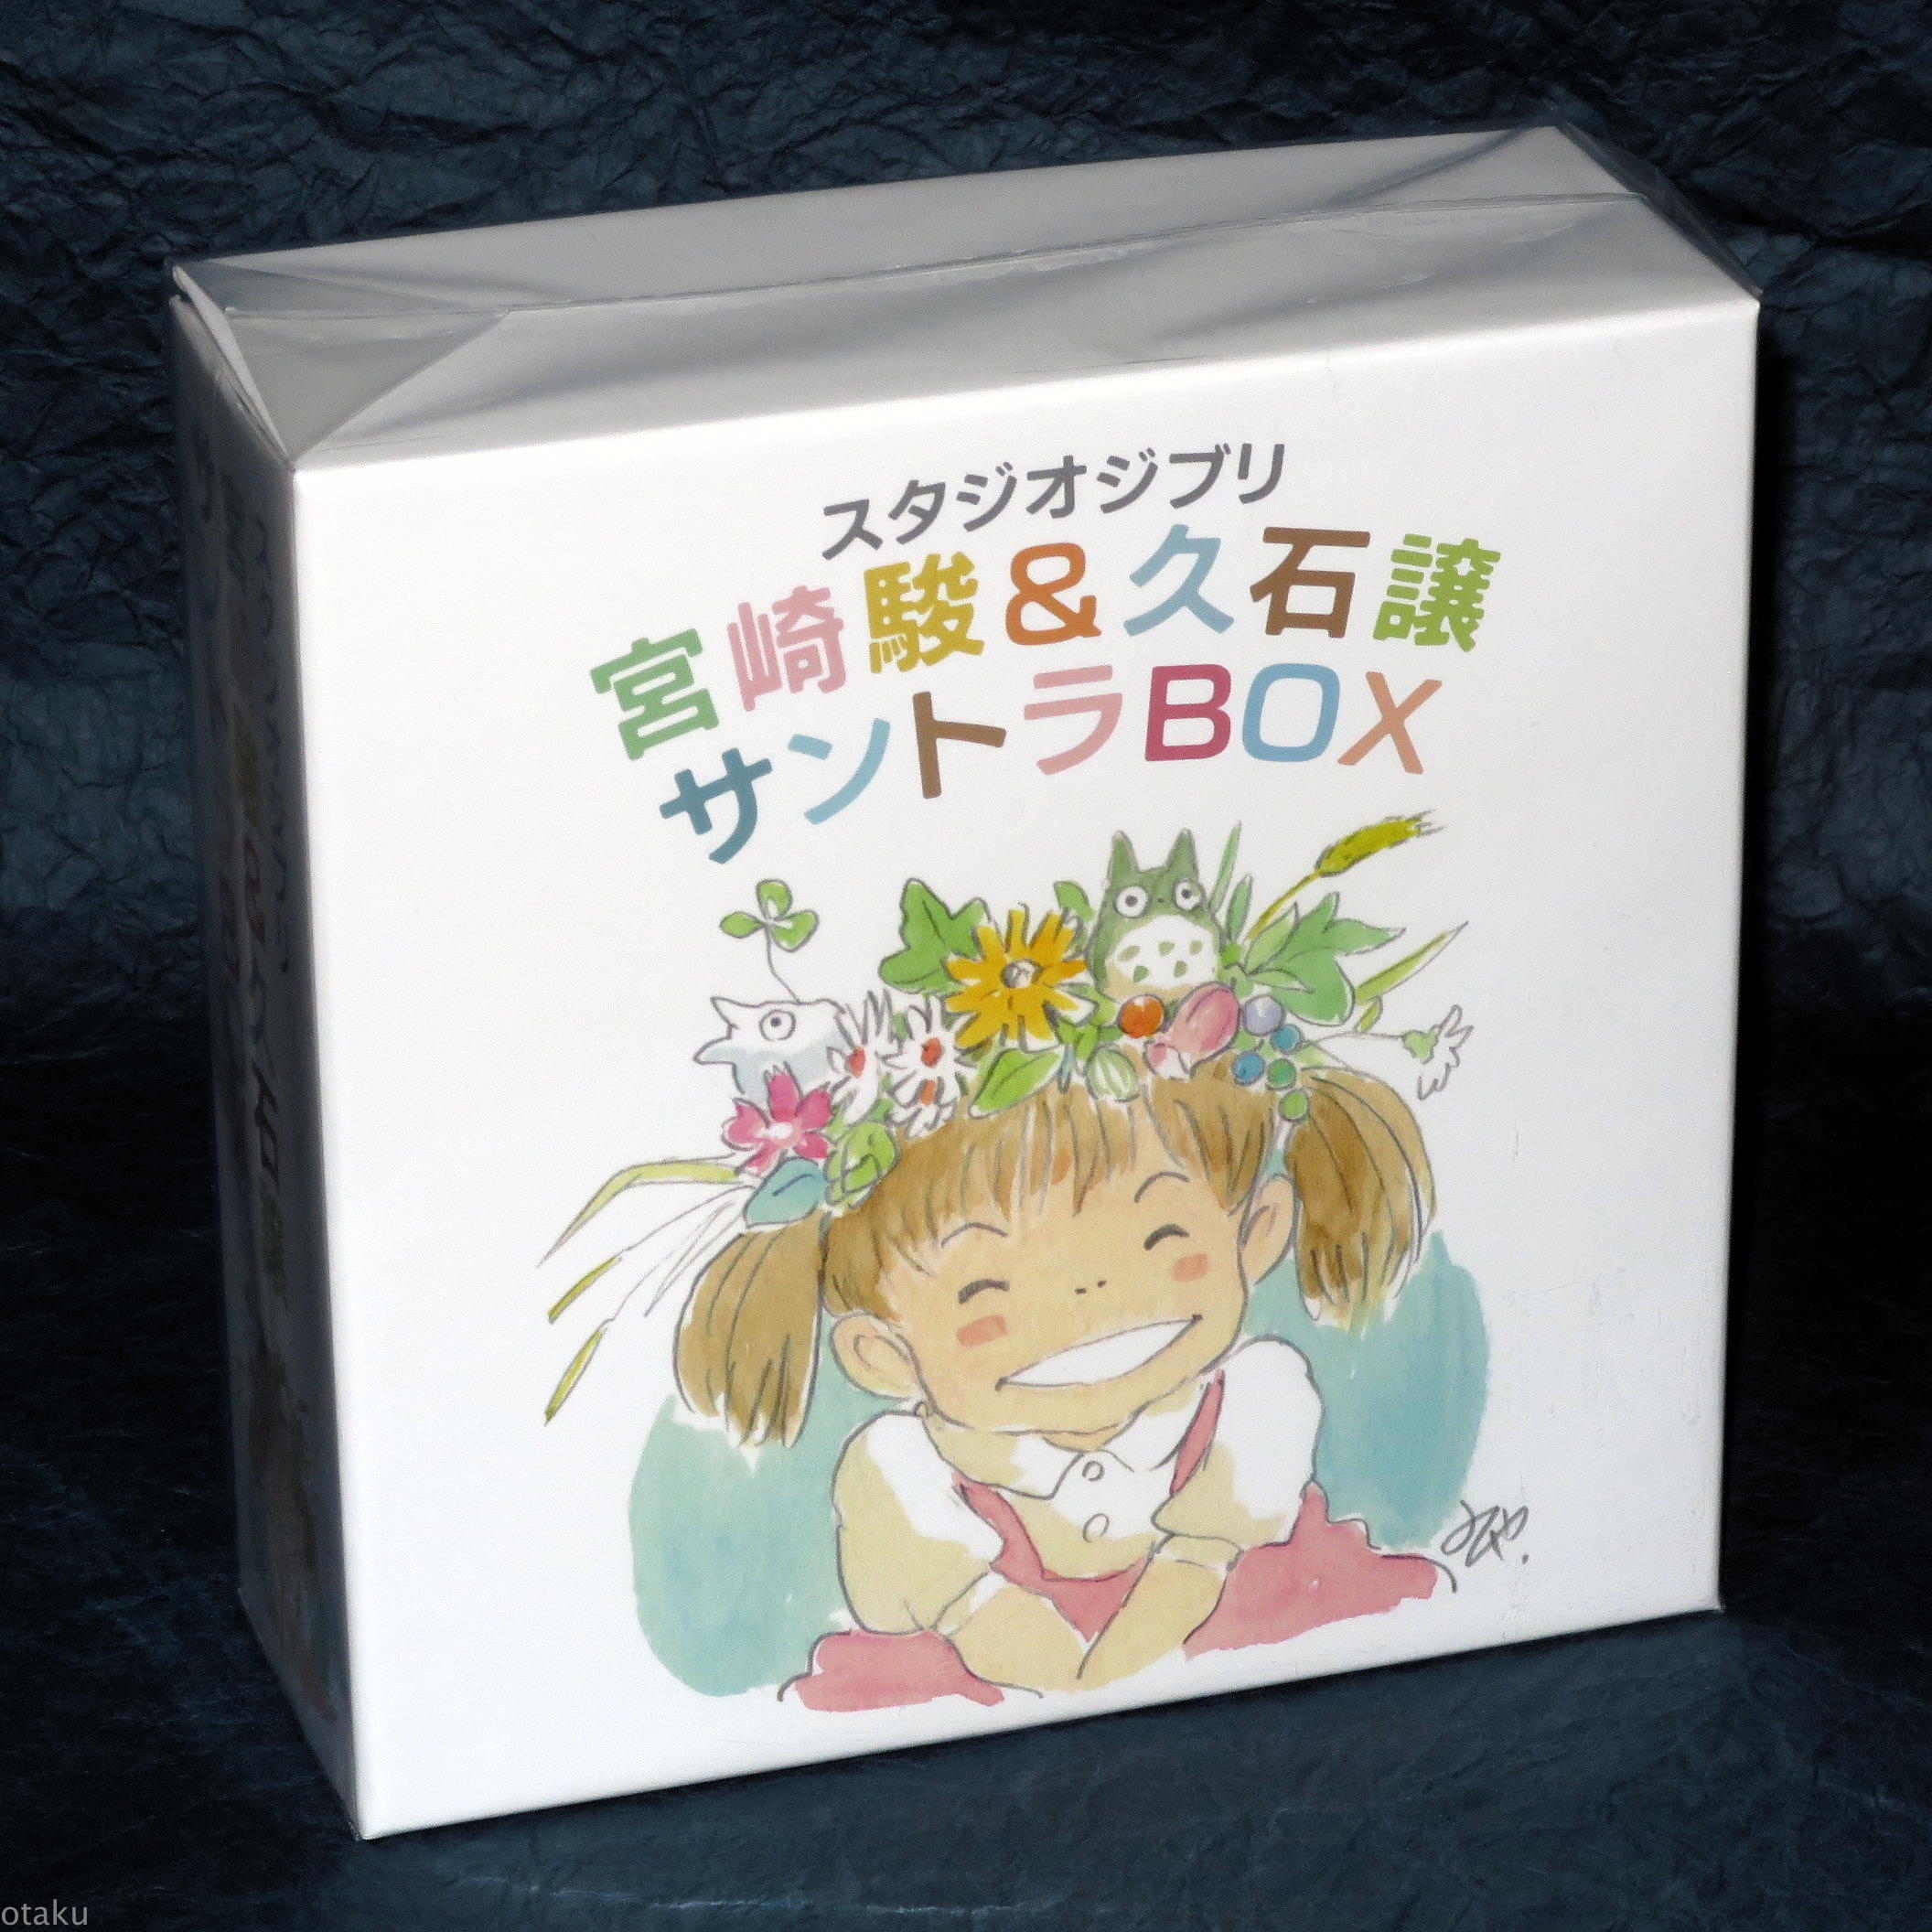 Studio Ghibli Hayao Miyazaki & Joe Hisaishi Soundtrack CD BOX Anime Japan